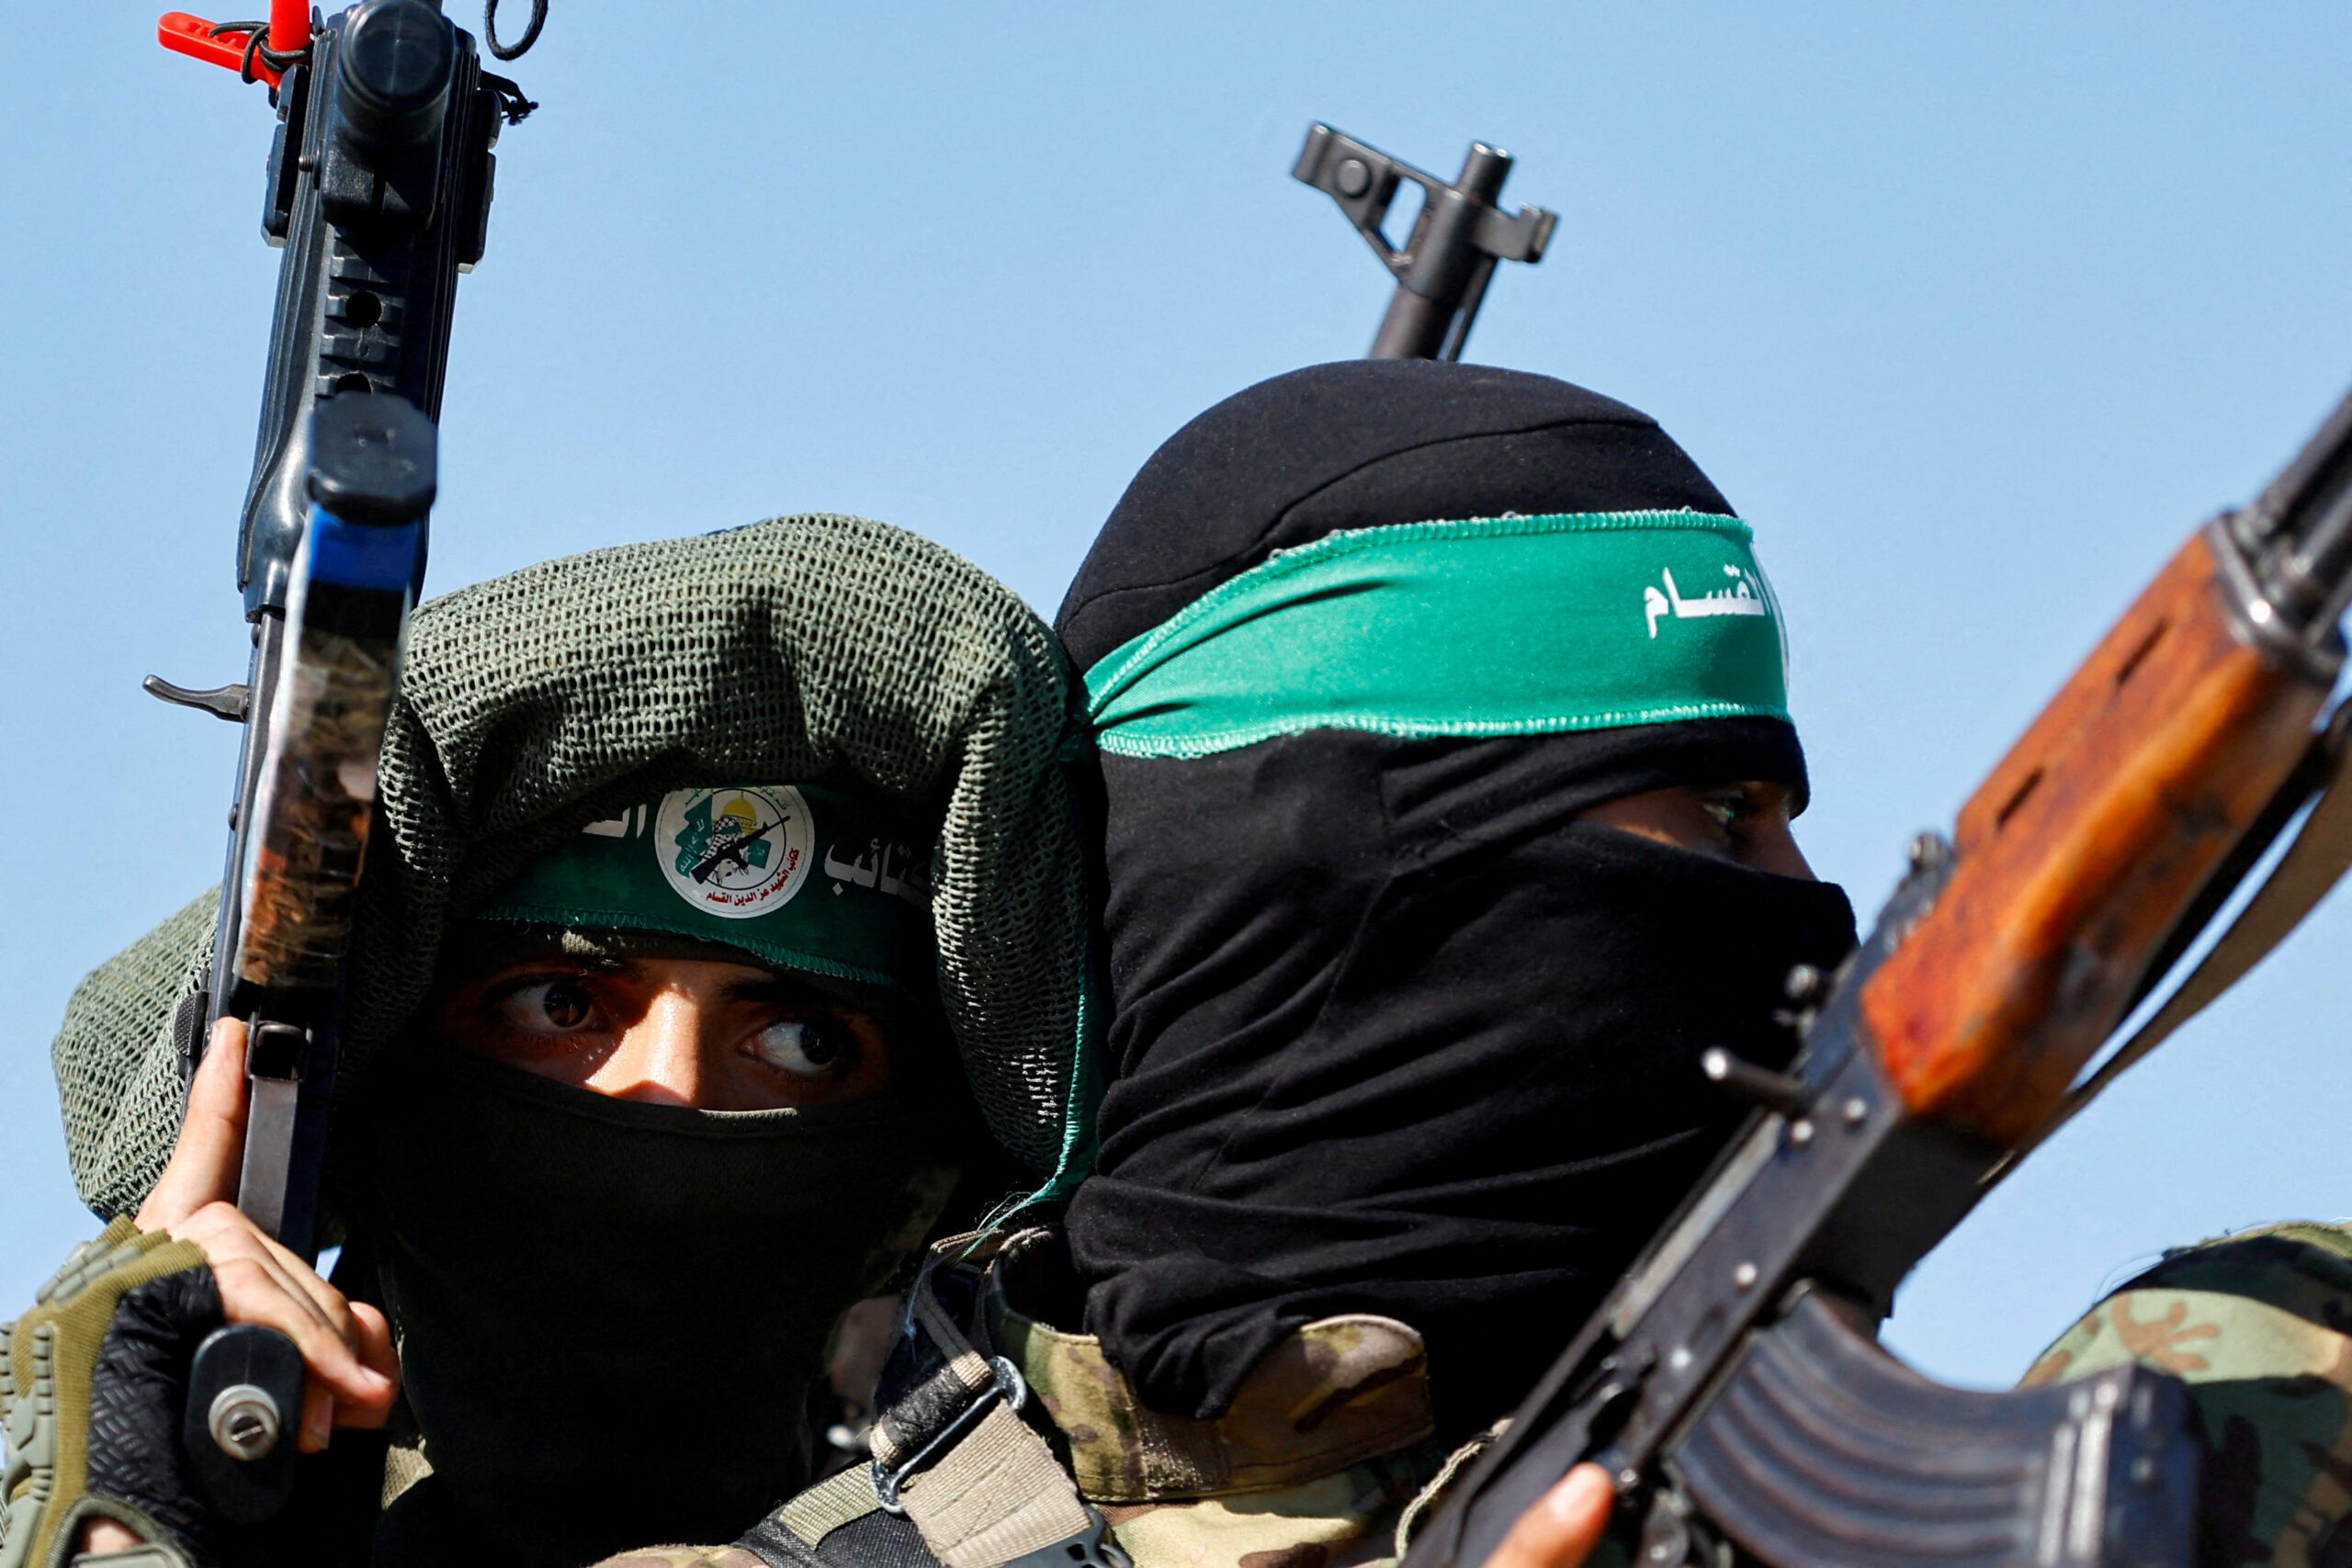 Hamas says it captured Israeli soldiers in Gaza; Israel denies